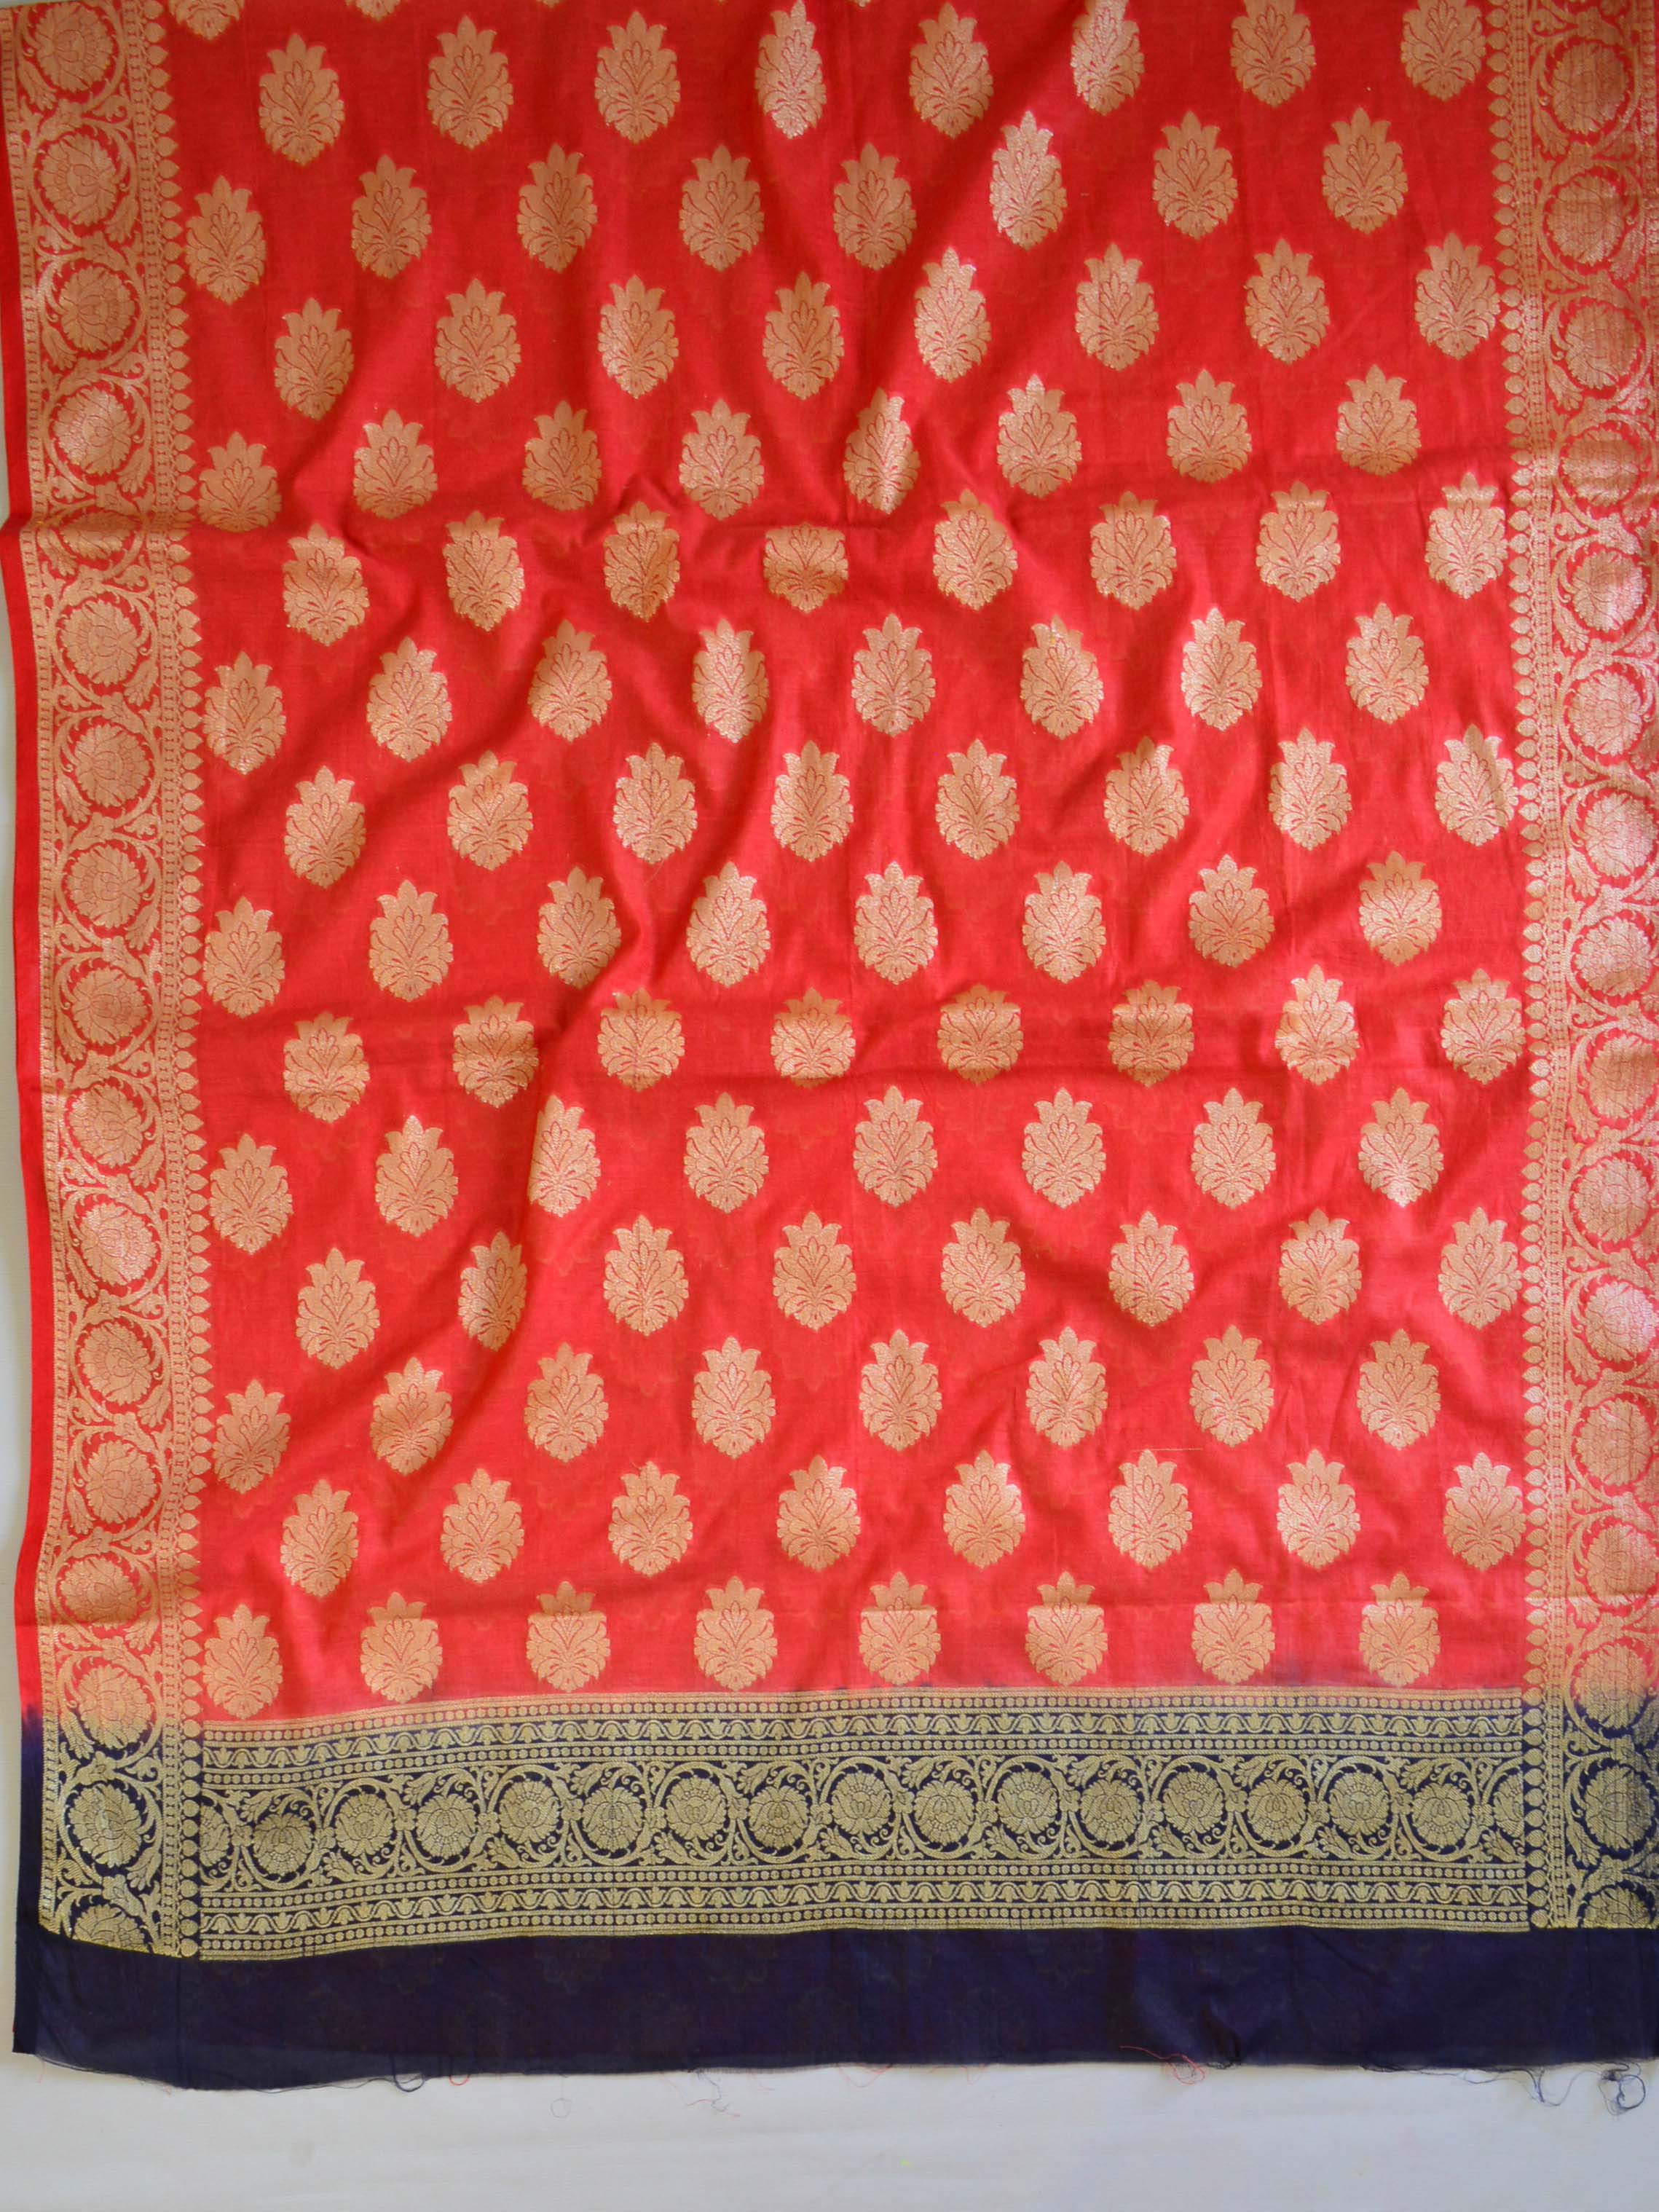 Banarasee Cotton Silk Zari Woven Salwar Kameez Dupatta Set-Orange With Blue